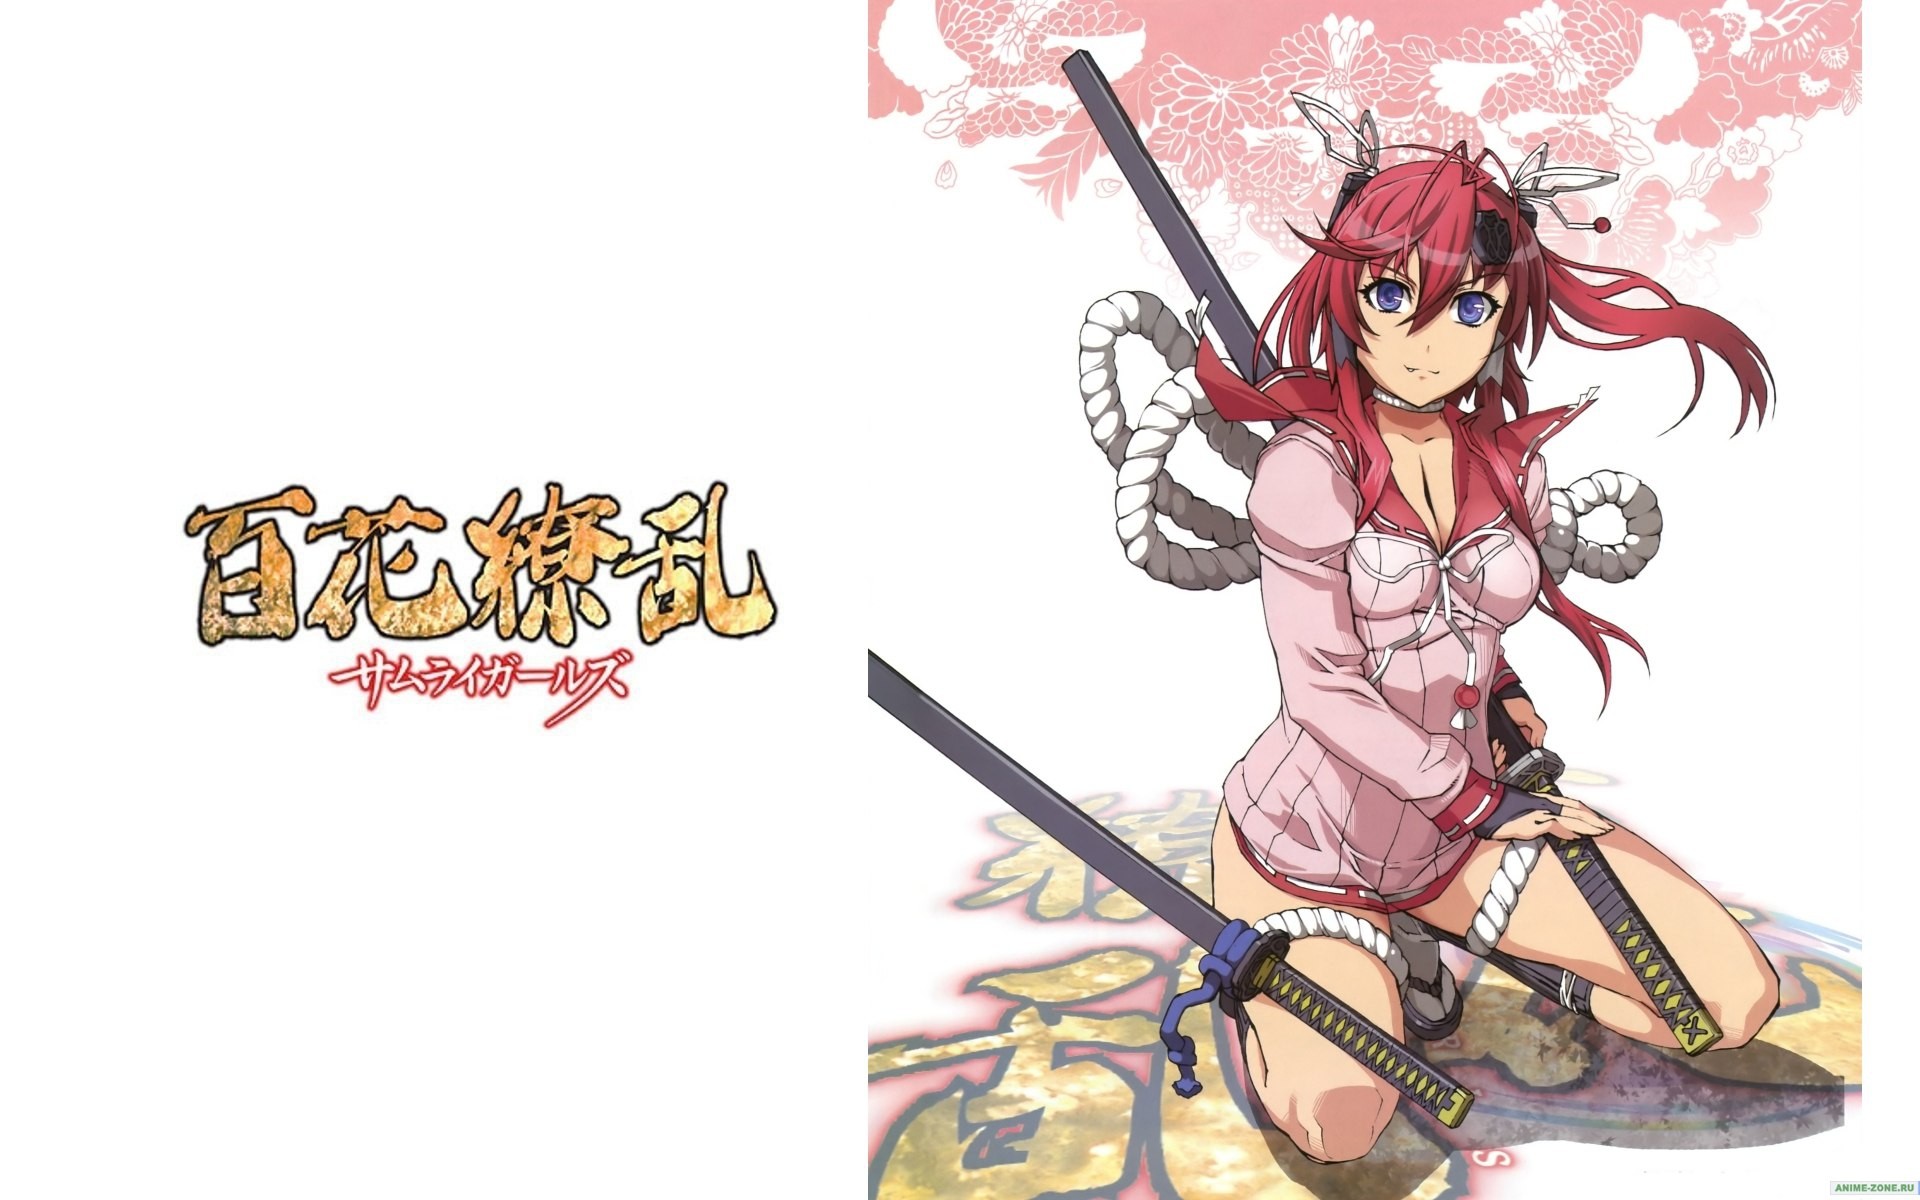 Anime 1920x1200 Hyakka Ryouran Samurai Girls anime girls Yagyuu Juubei anime redhead purple eyes kneeling sword women with swords